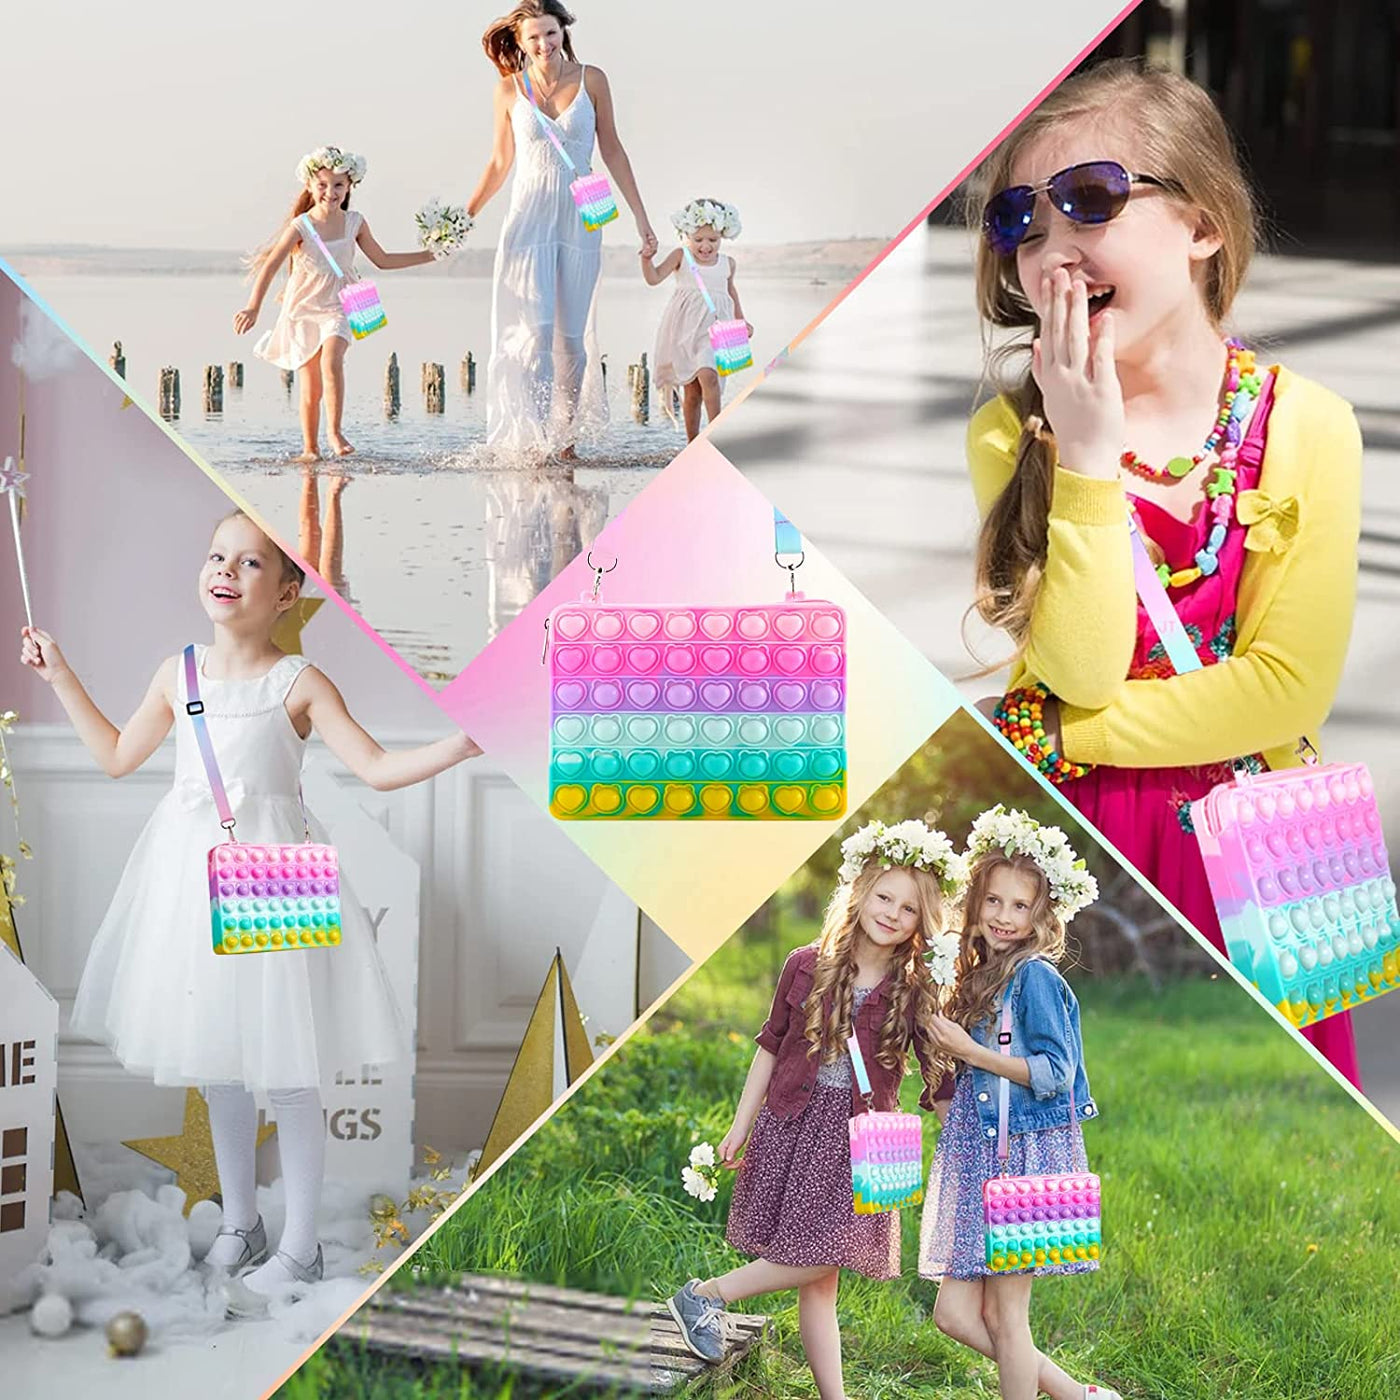 Pop Purse Easter Day Gifts Fidget Toy, Rainbow Fidget Purse Pop Shoulder Bag, Easter Birthday School Supplies Fidgets 